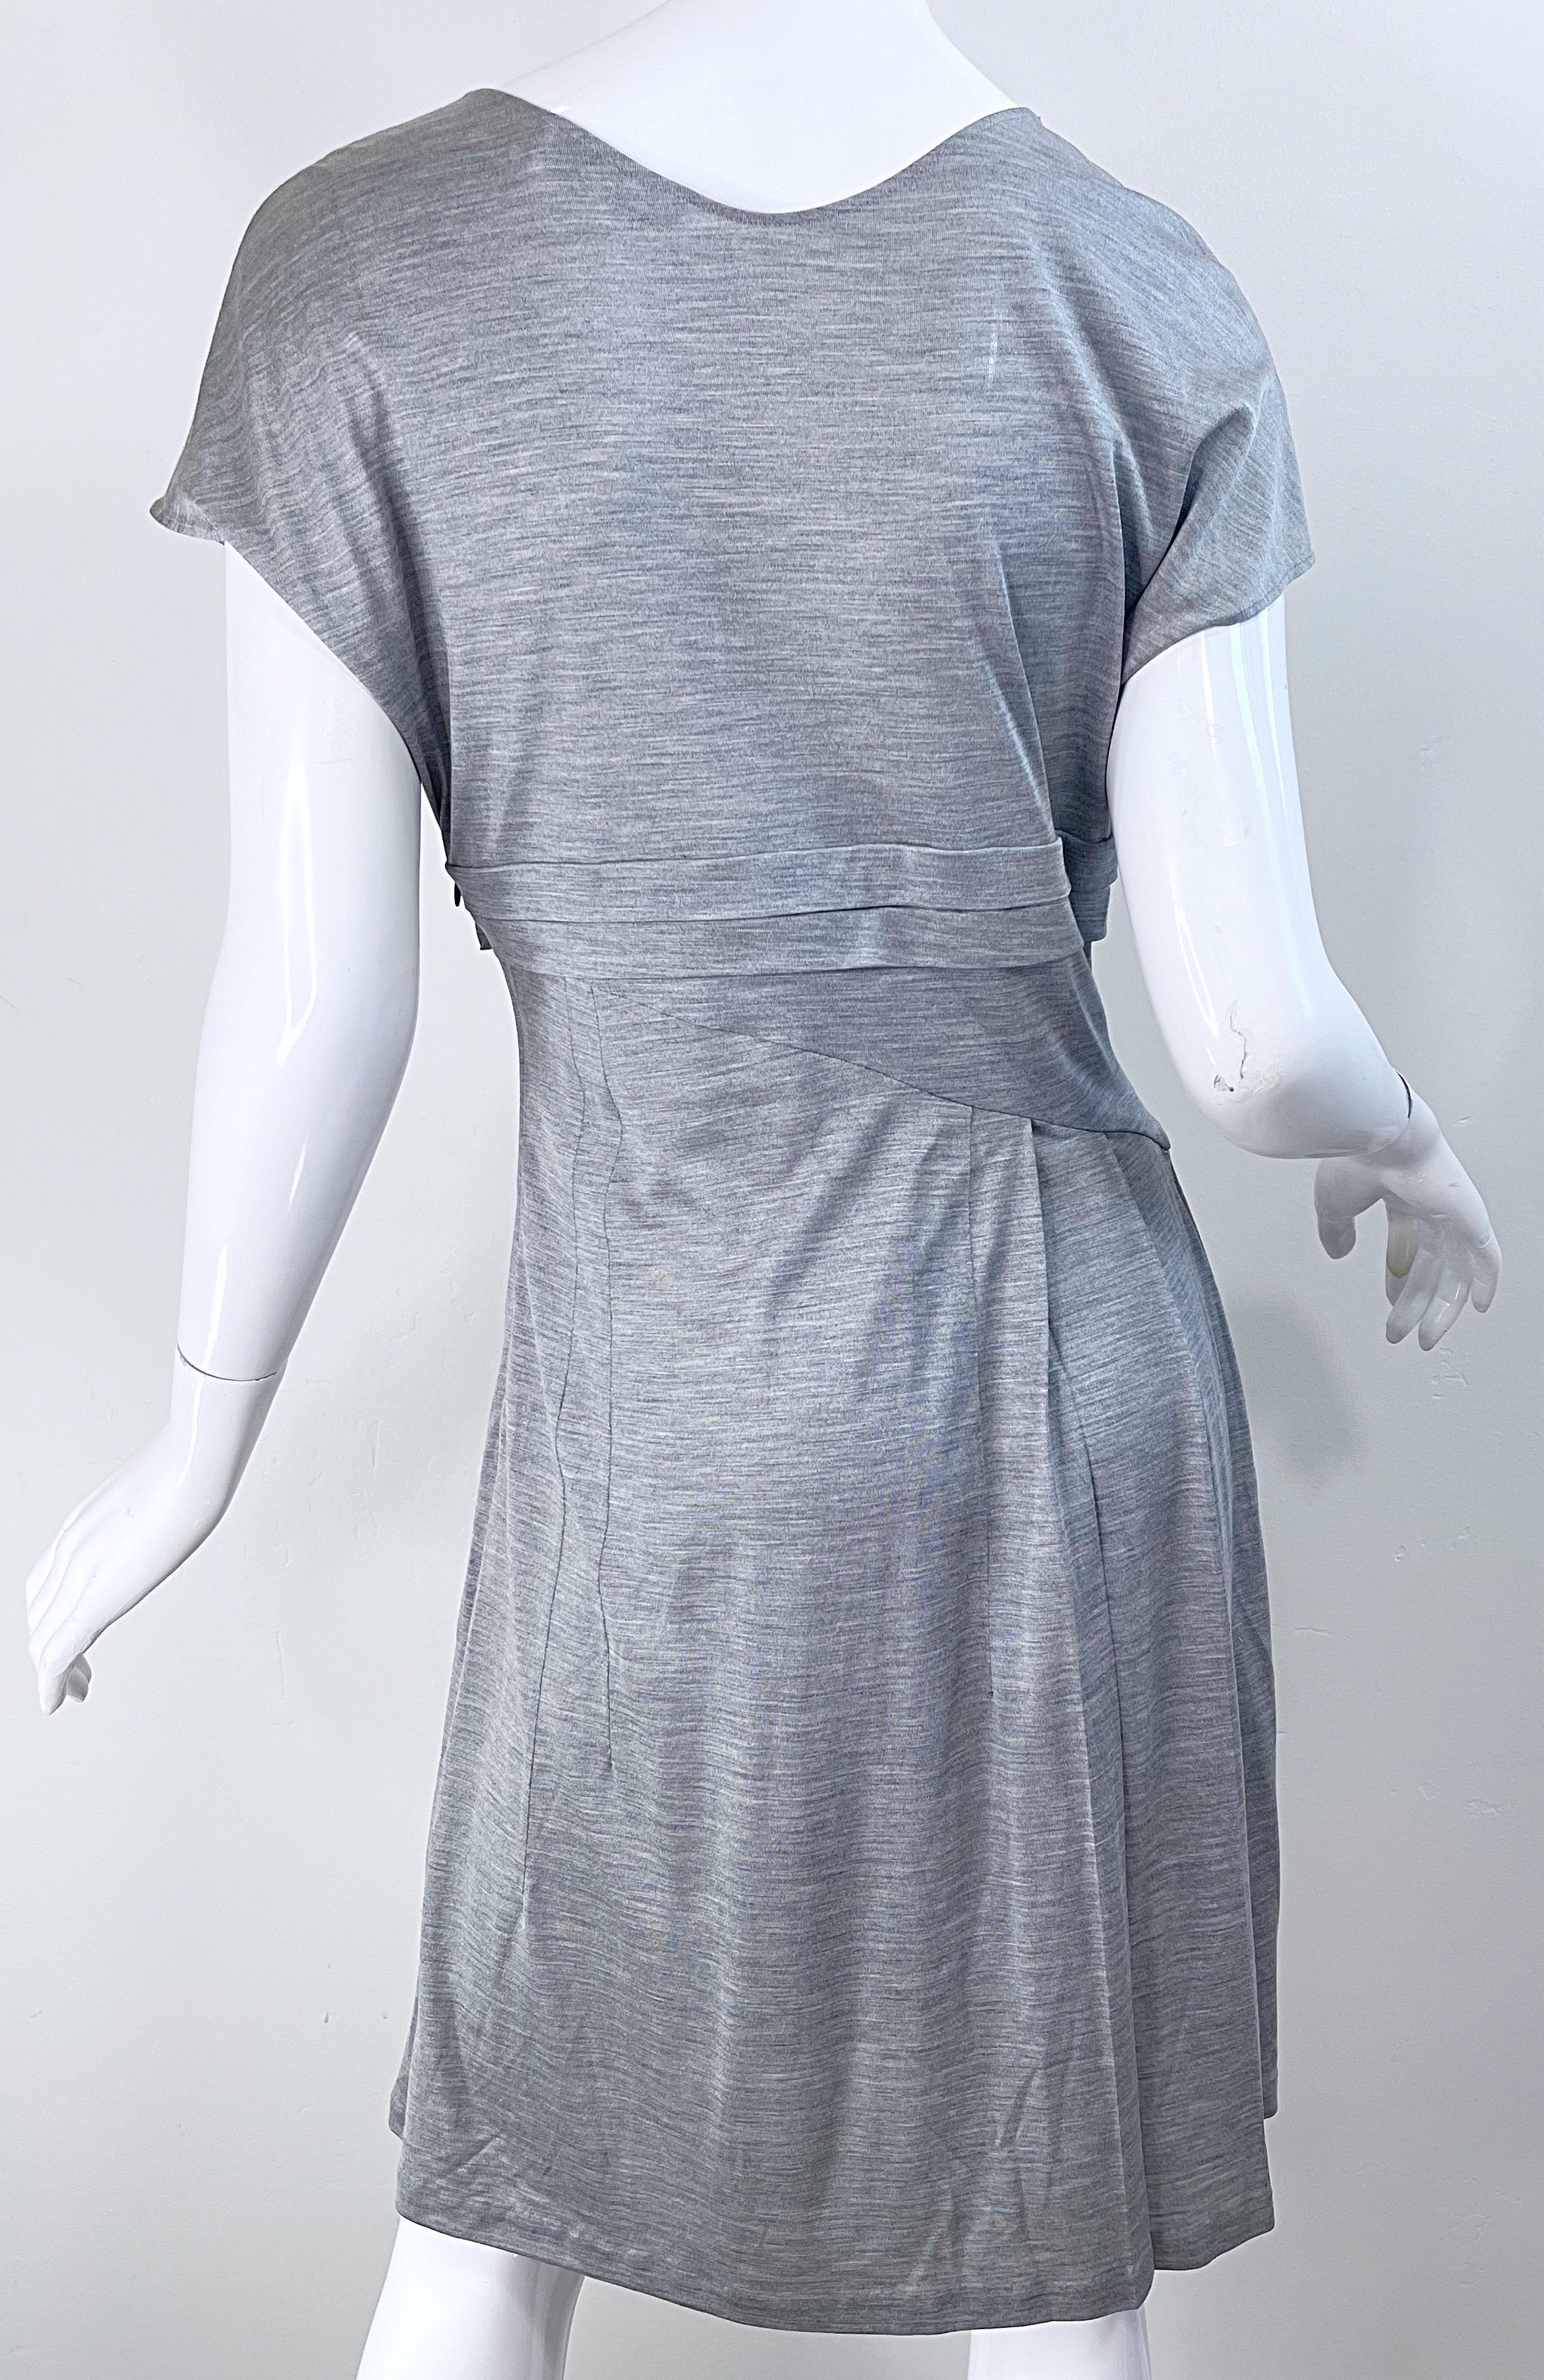 Christian Dior by John Galliano Spring 2007 Size 8 Grey Silk Short Sleeve Dress For Sale 1